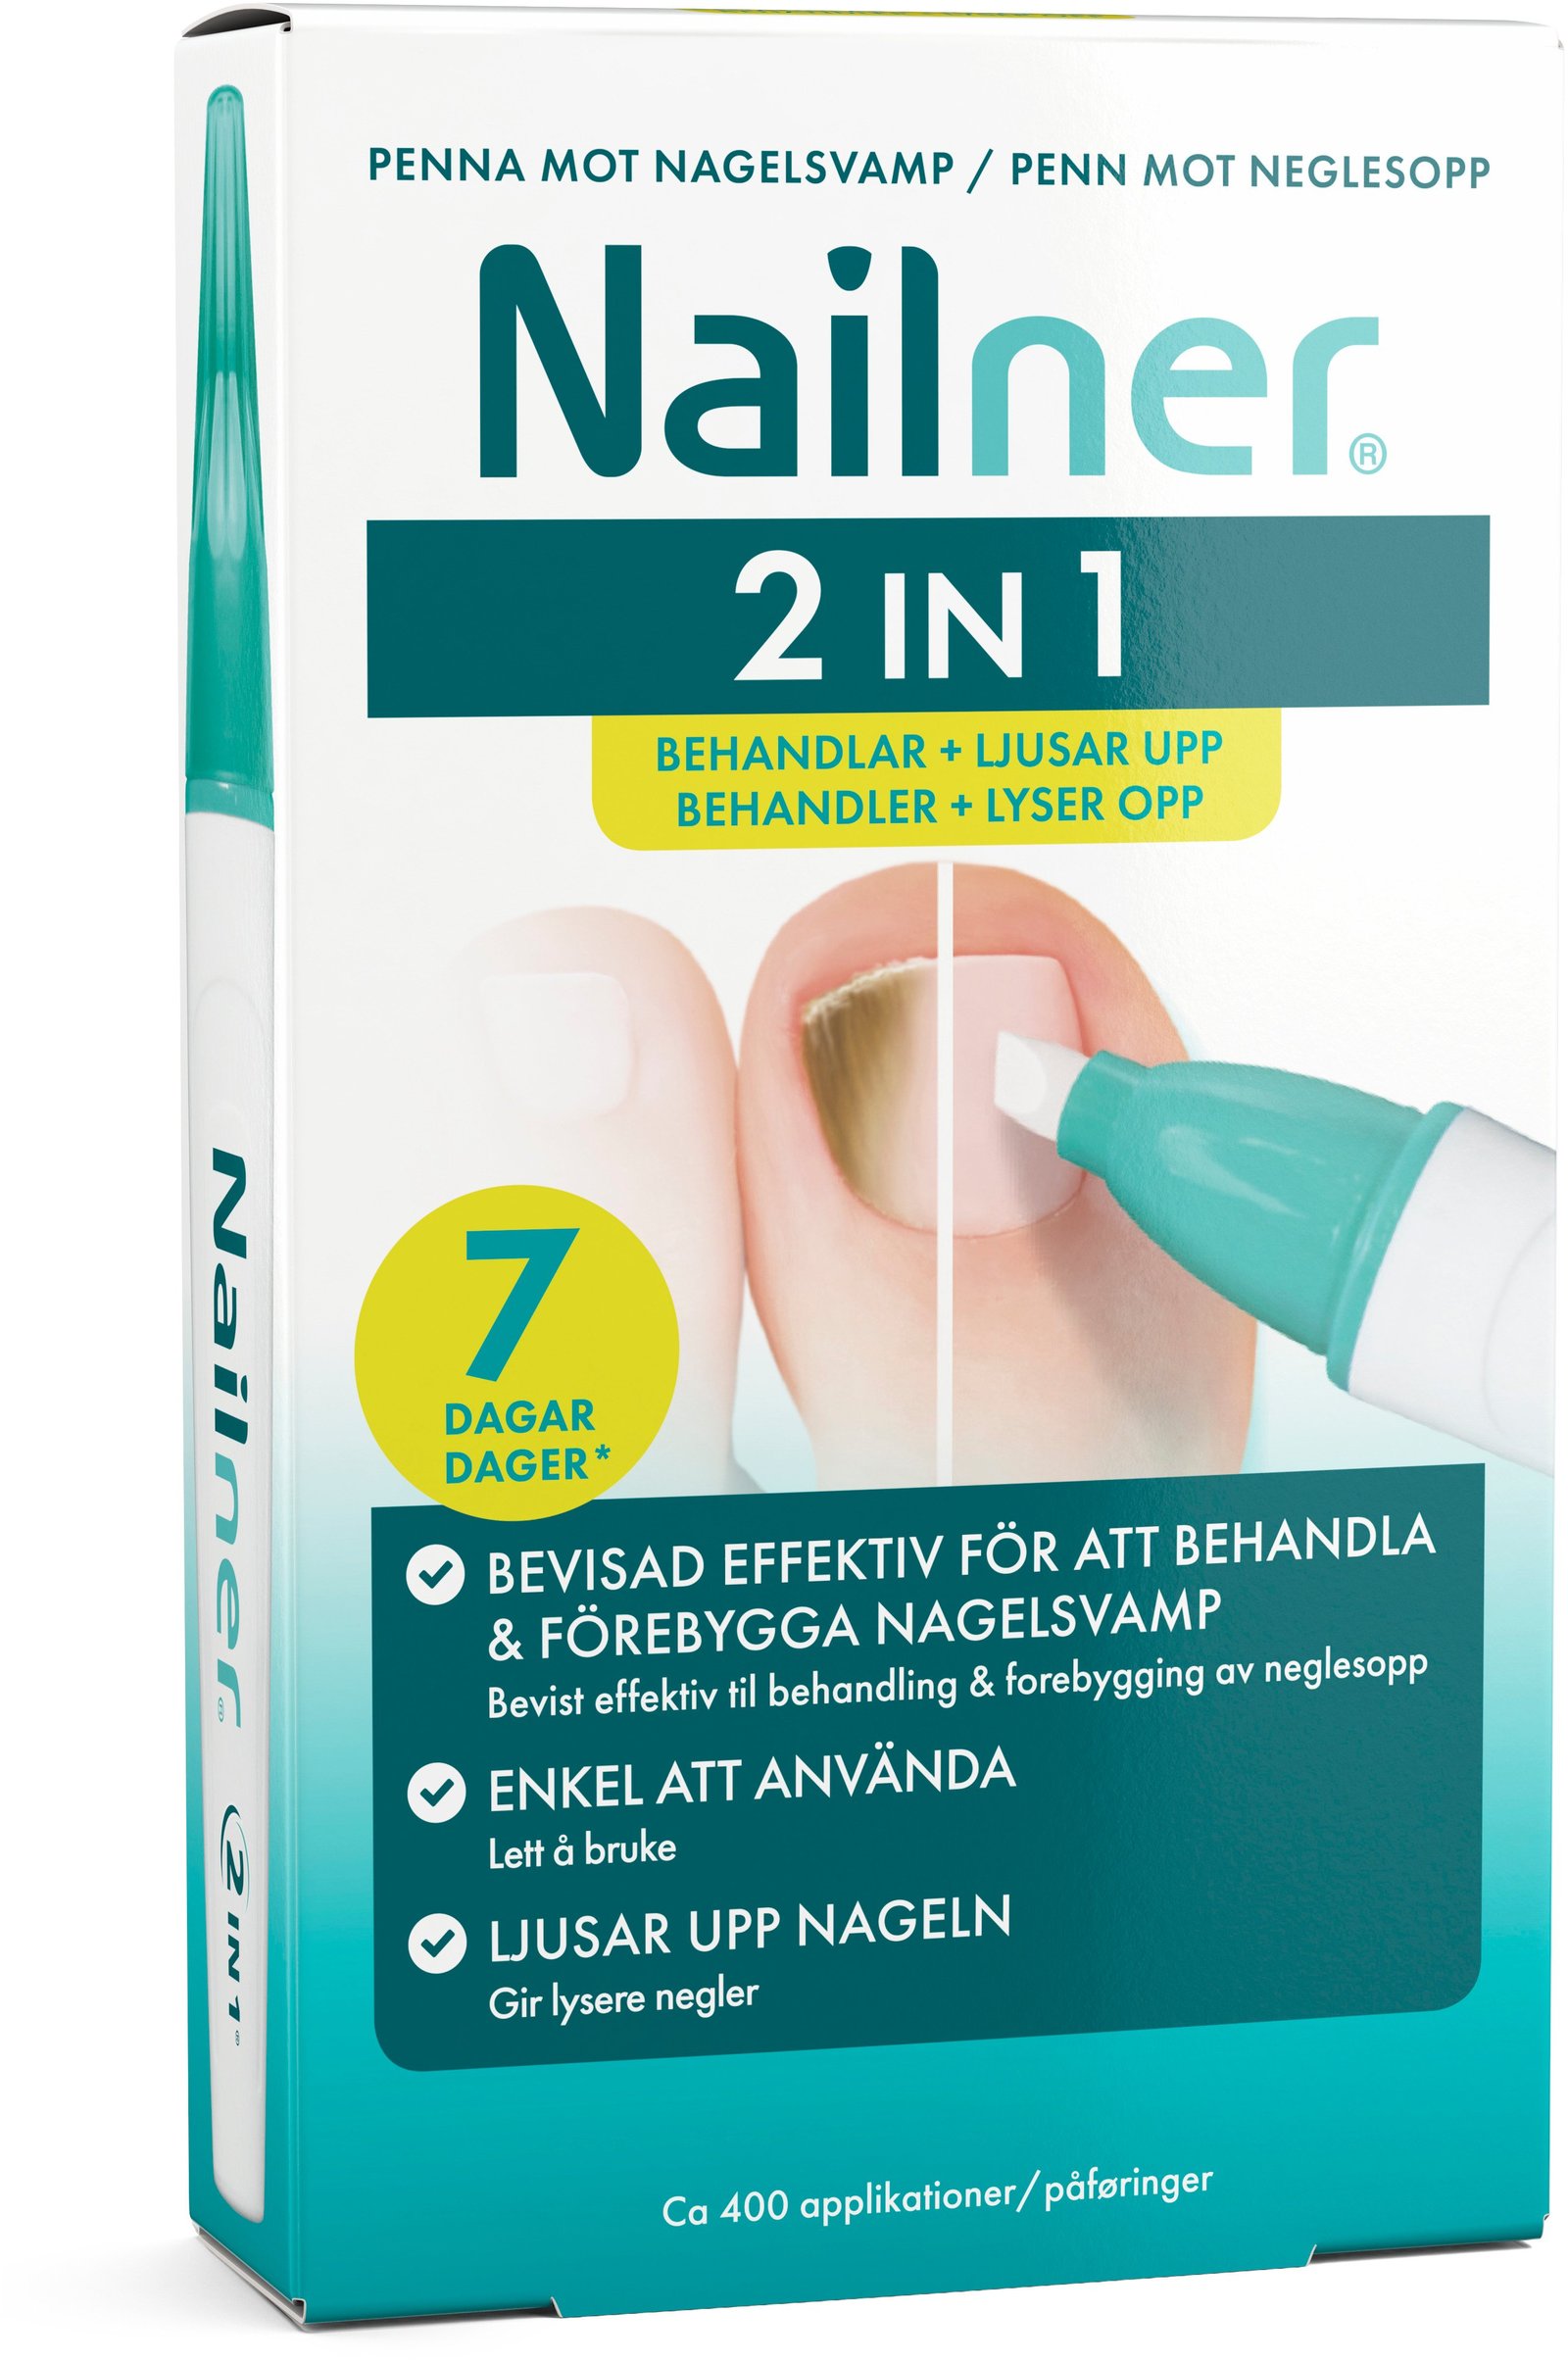 Nailner 2 in 1 Nagelsvampsbehandling Penna 1 st